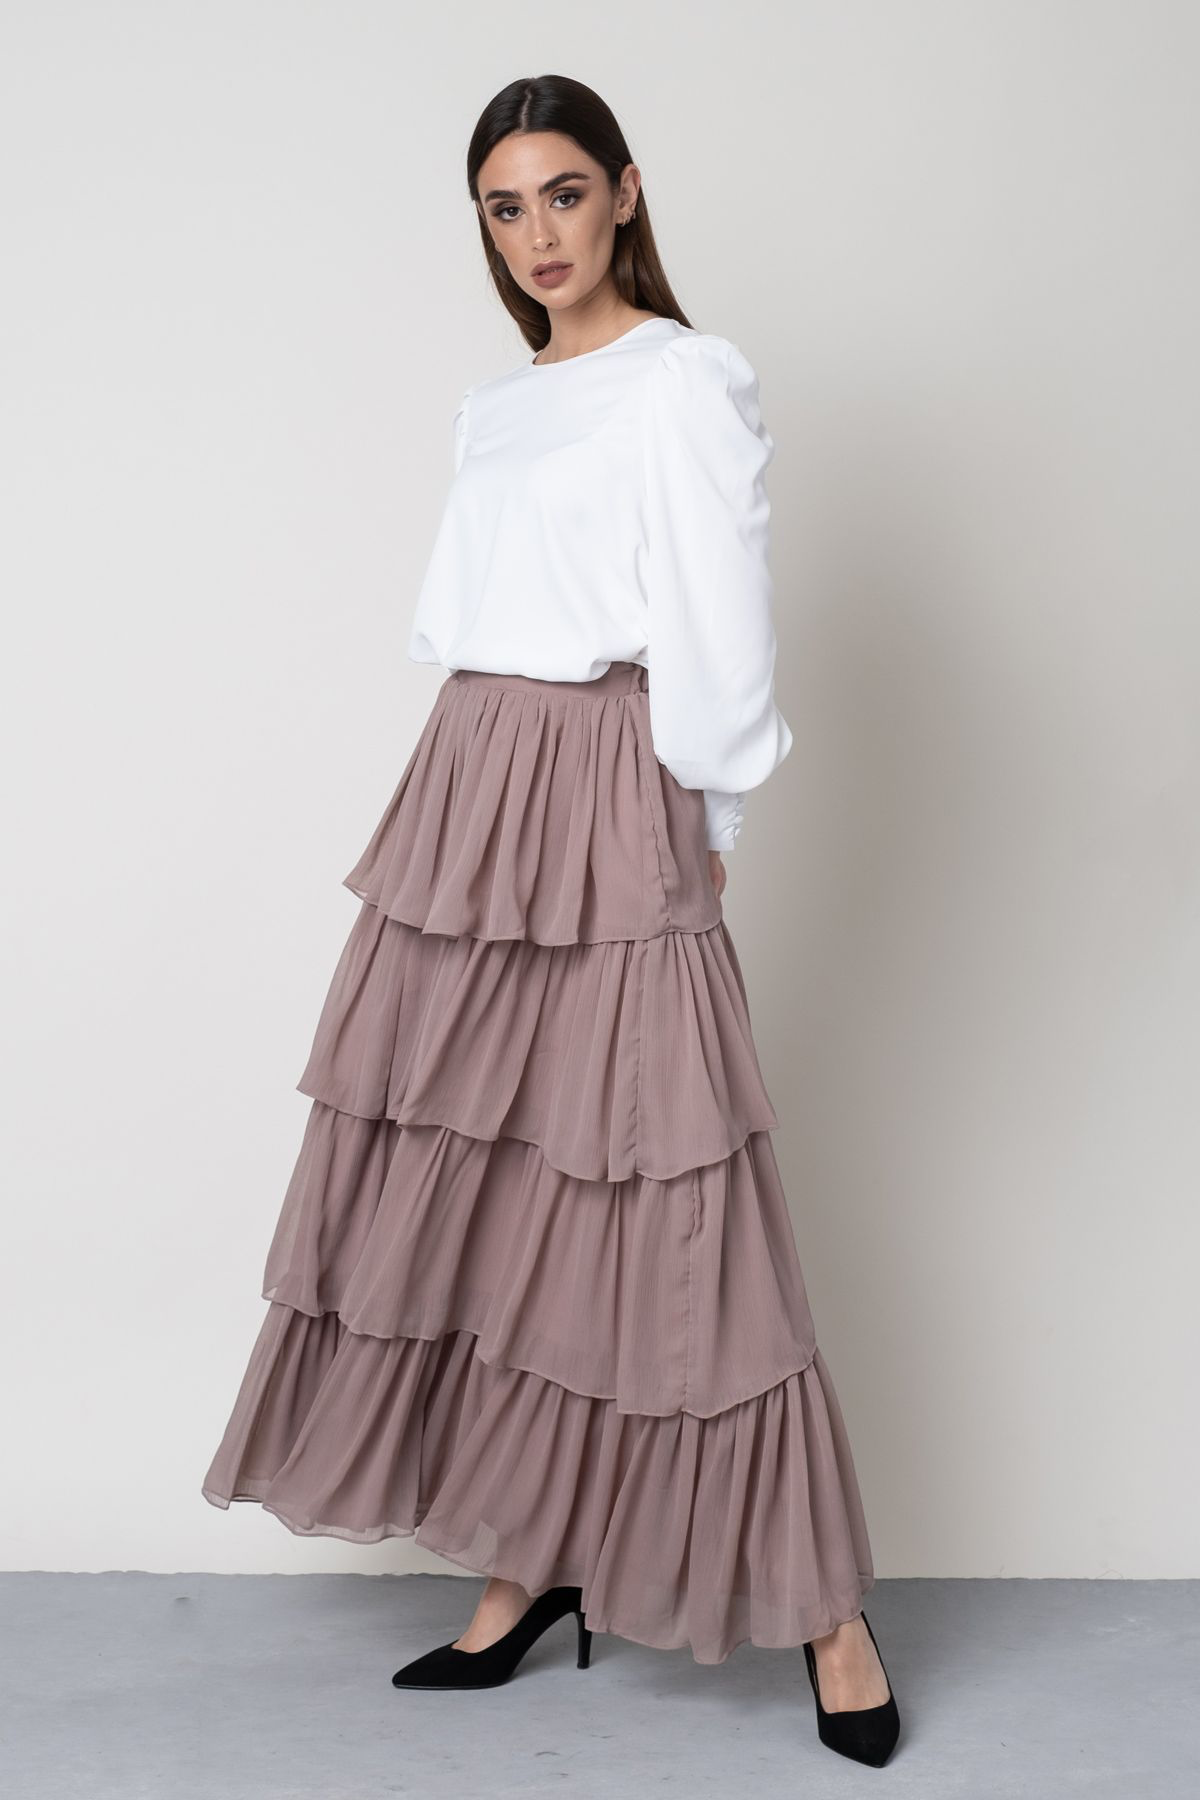 layered skirt style